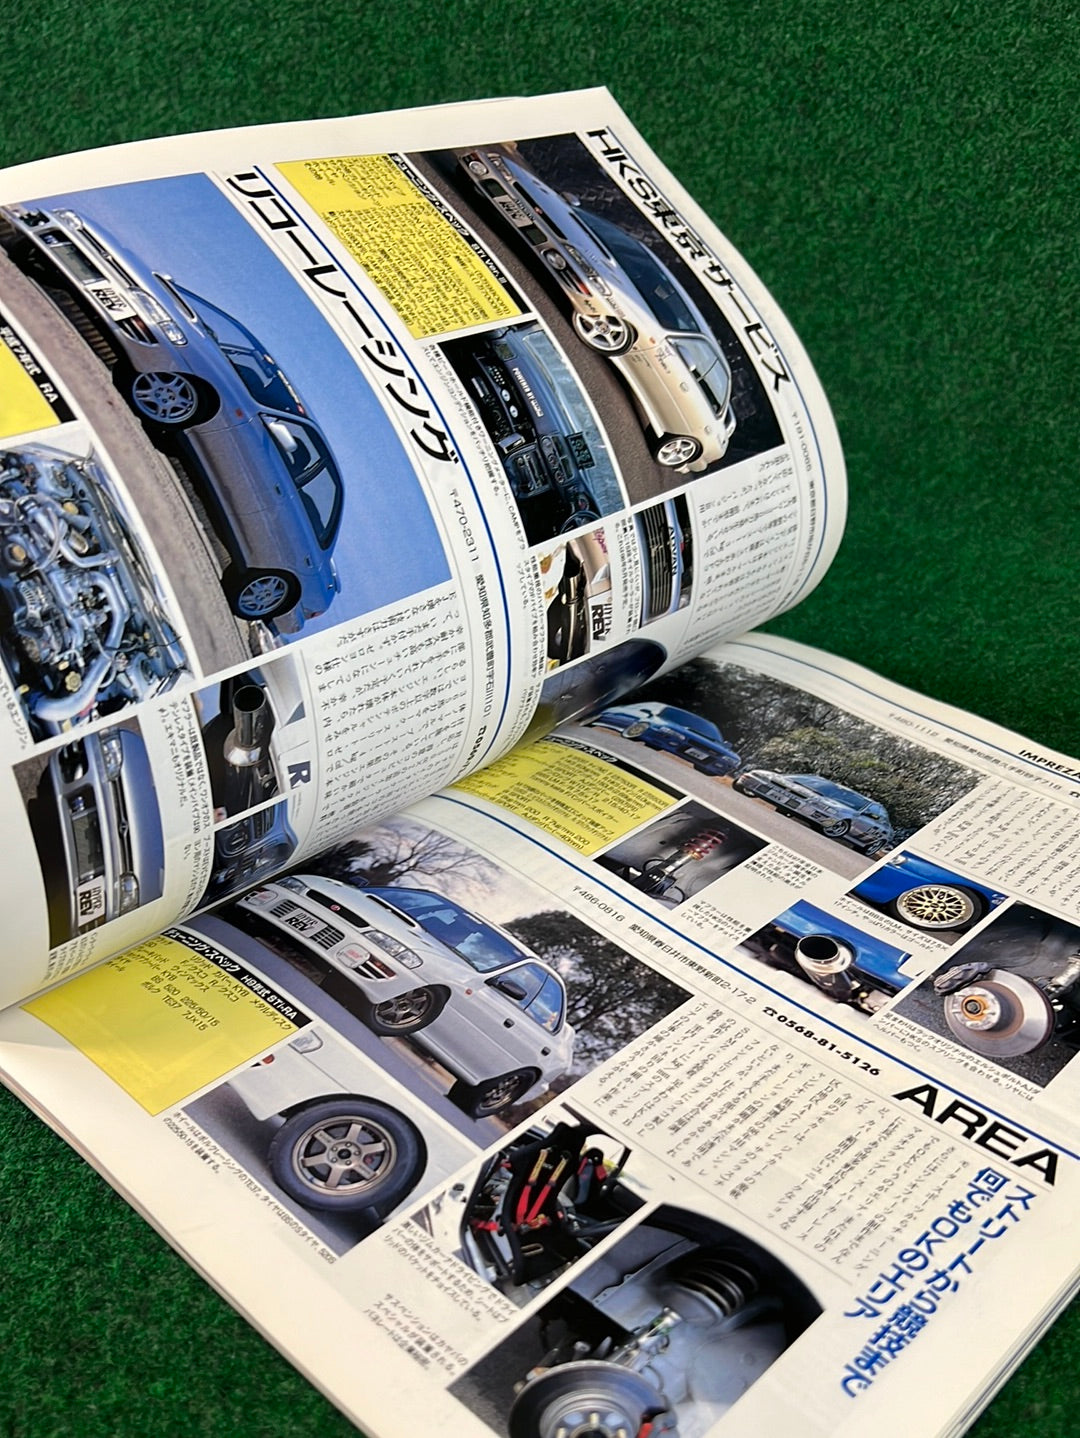 Hyper Rev Magazine - Subaru Impreza No. 2 Vol. 28